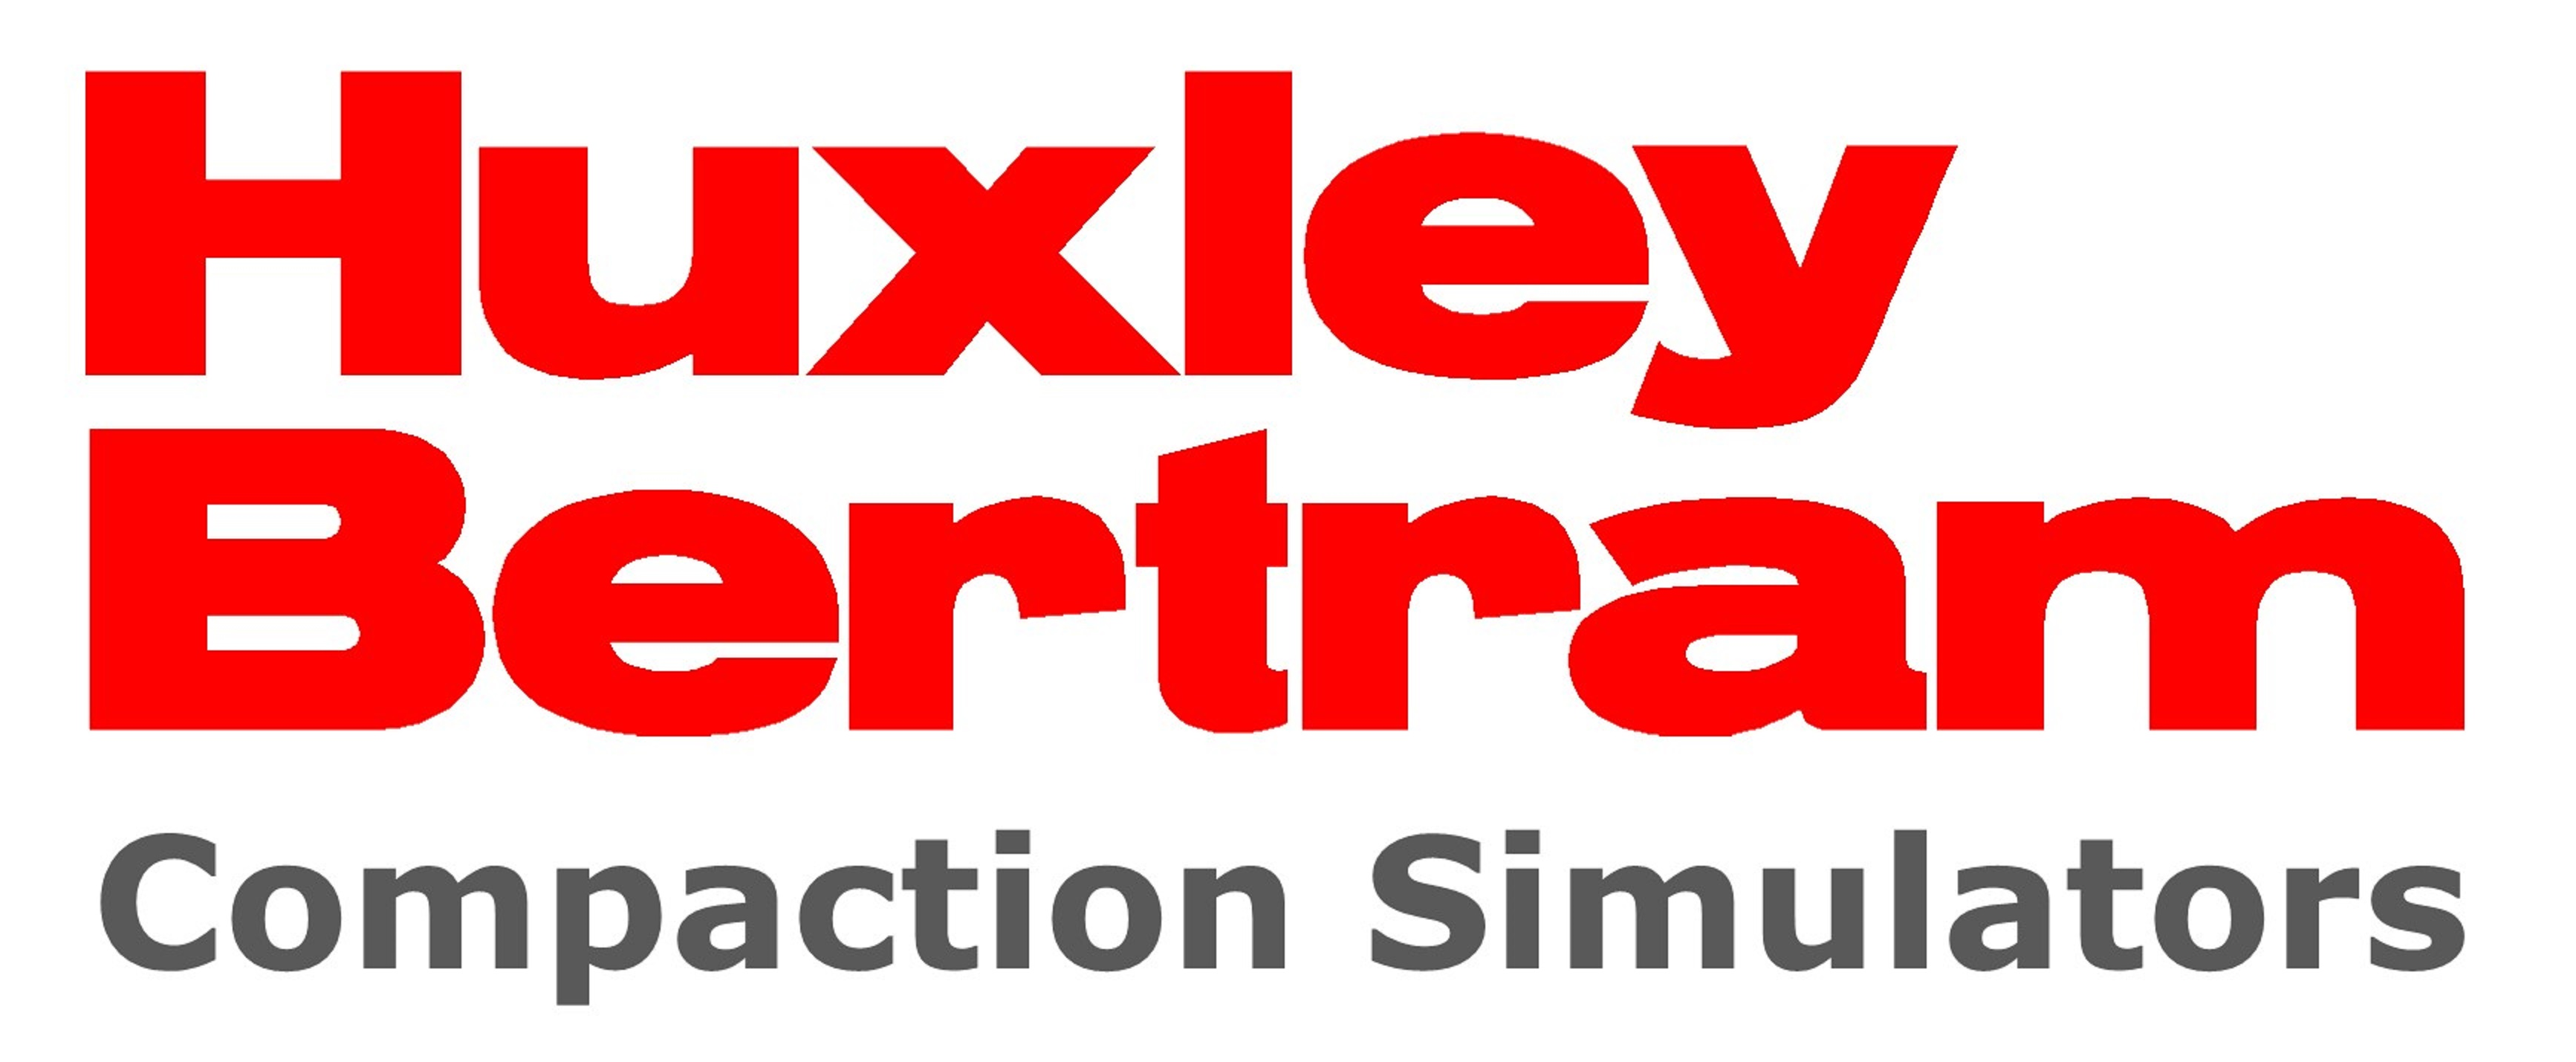 Huxley Bertram Tablet Compaction Simulators